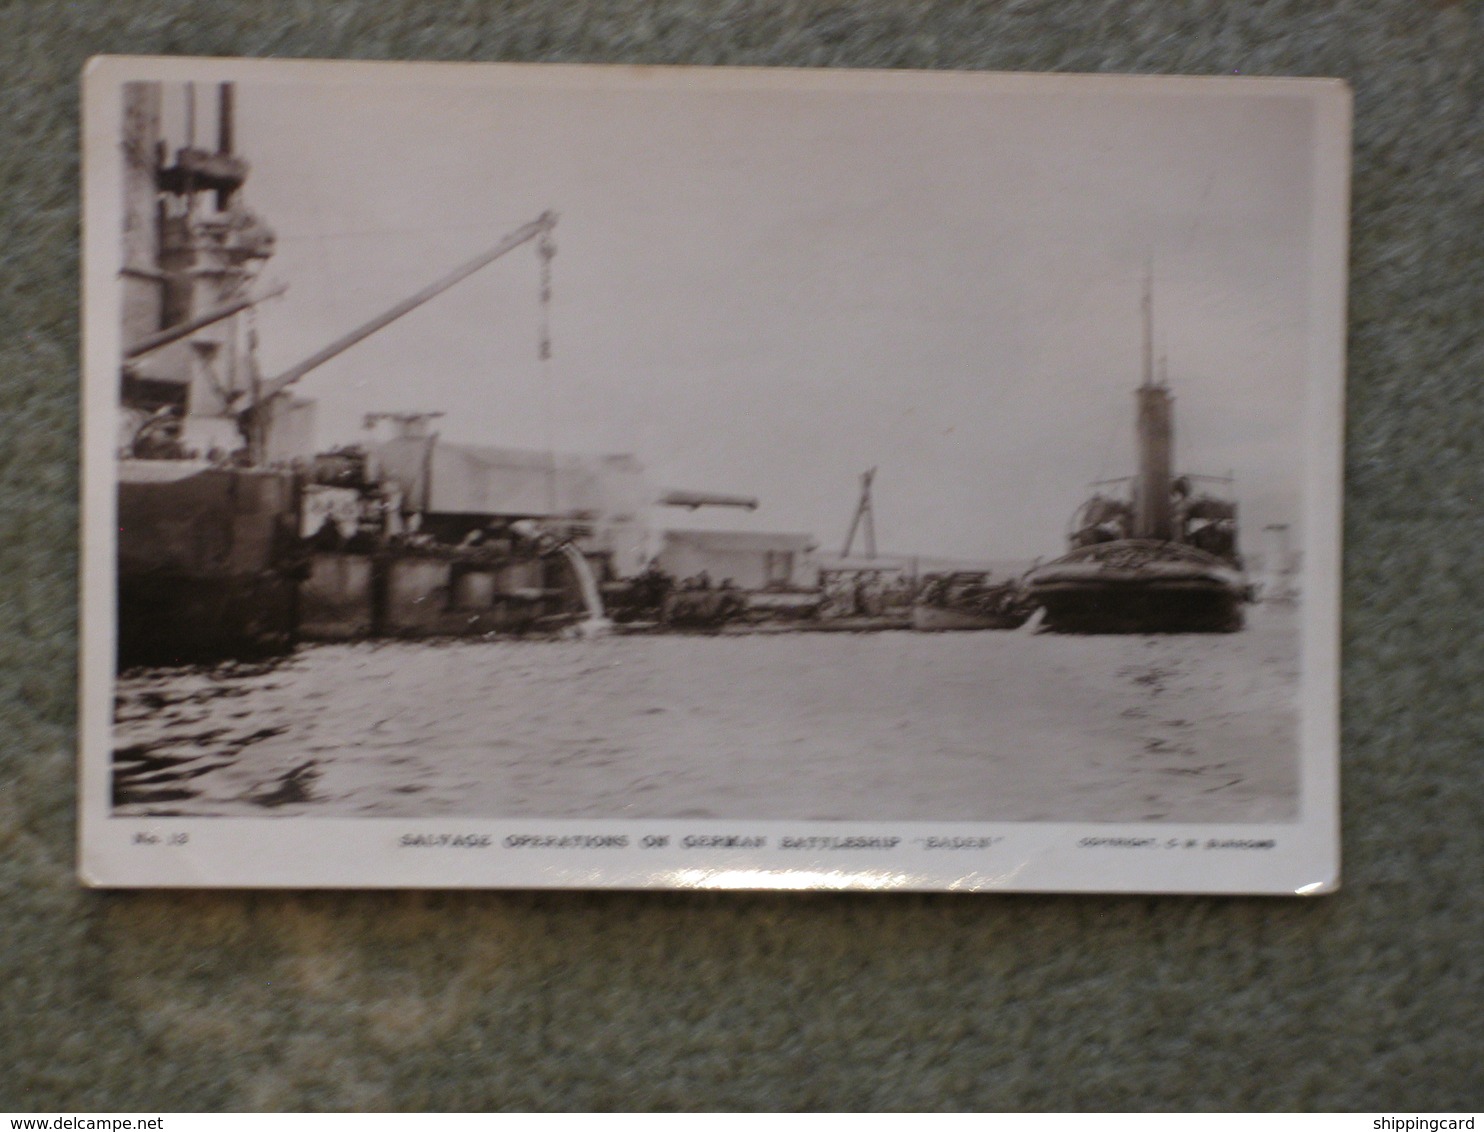 SCAPA FLOW SCUTTLING OF GERMAN FLEET - BURROWS NO 13, BADEN BATTLESHIP RP - Warships